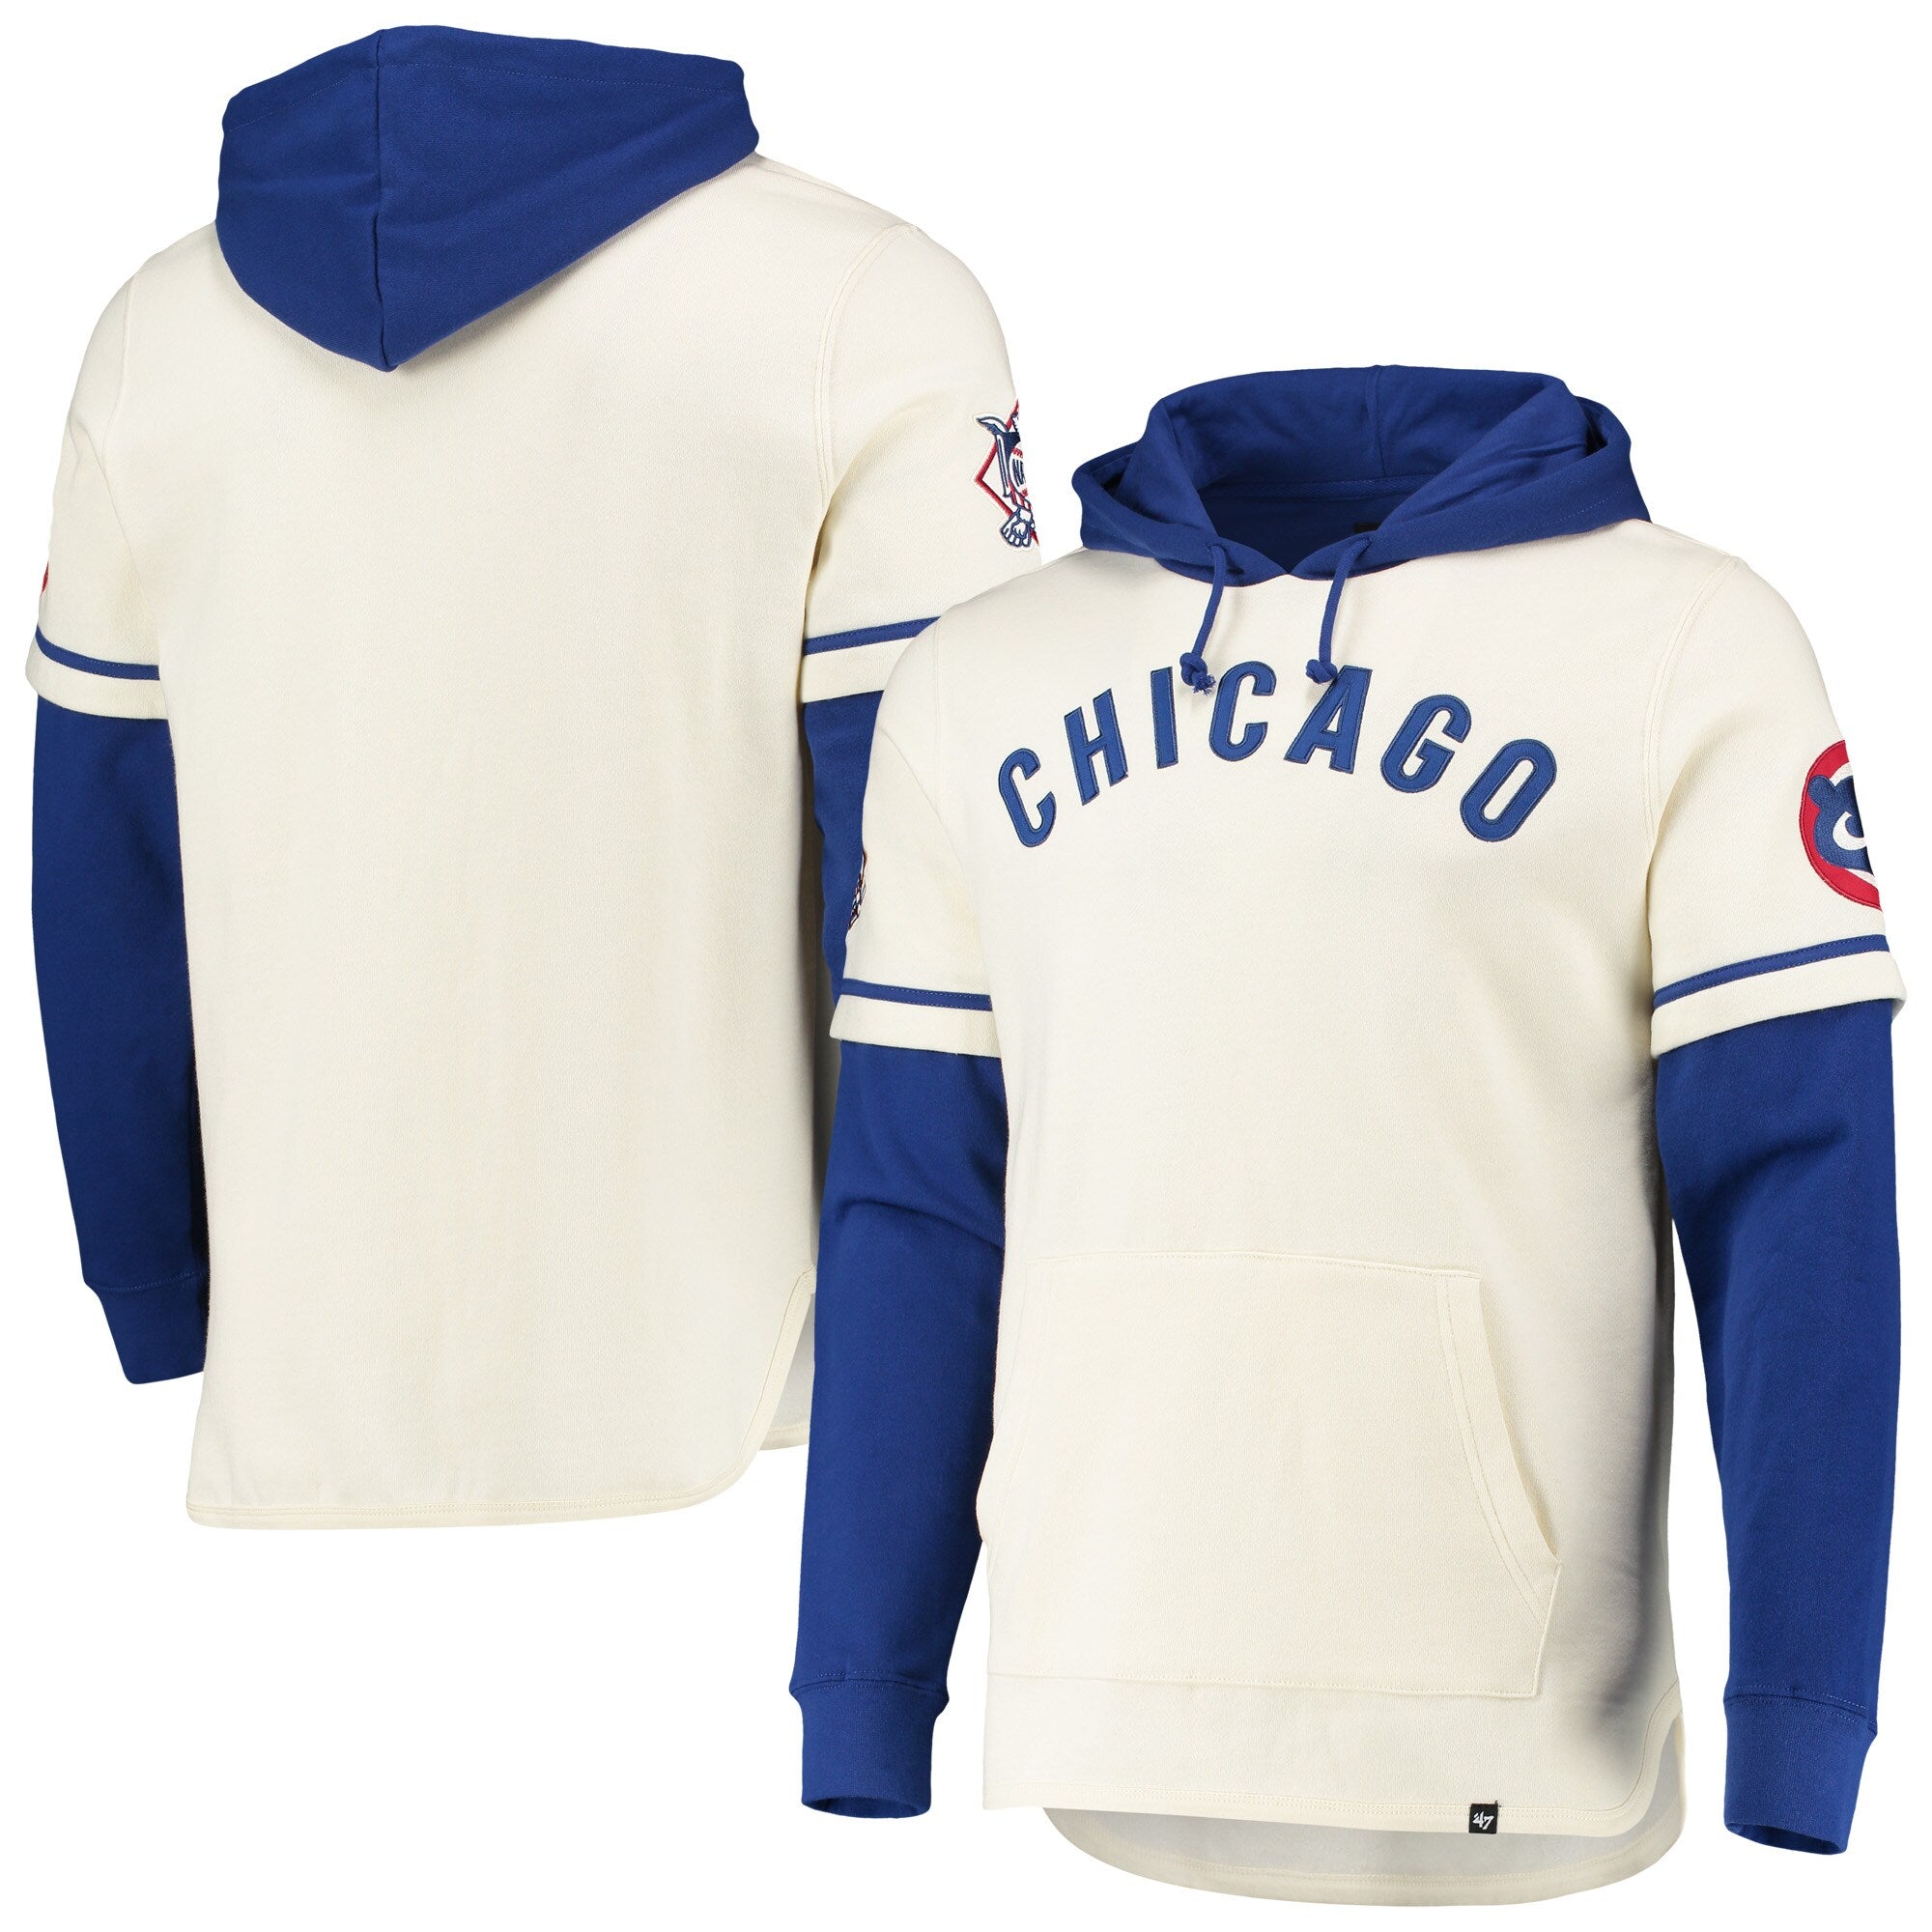 Chicago Cubs Sweatshirt  Hot Sale, SAVE 43